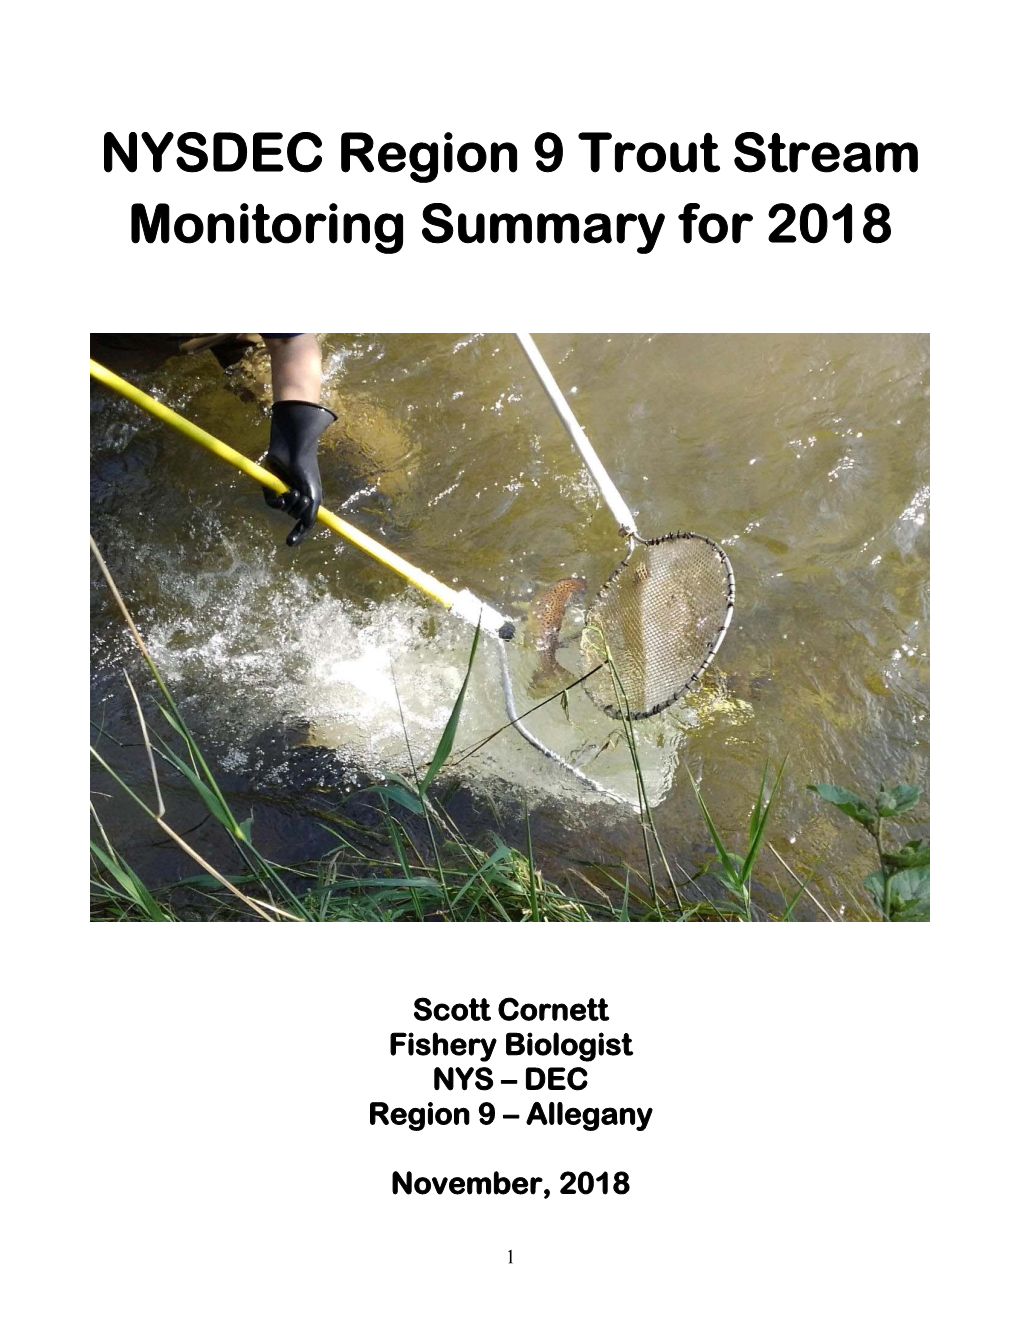 NYSDEC Region 9 Trout Stream Monitoring Summary for 2018